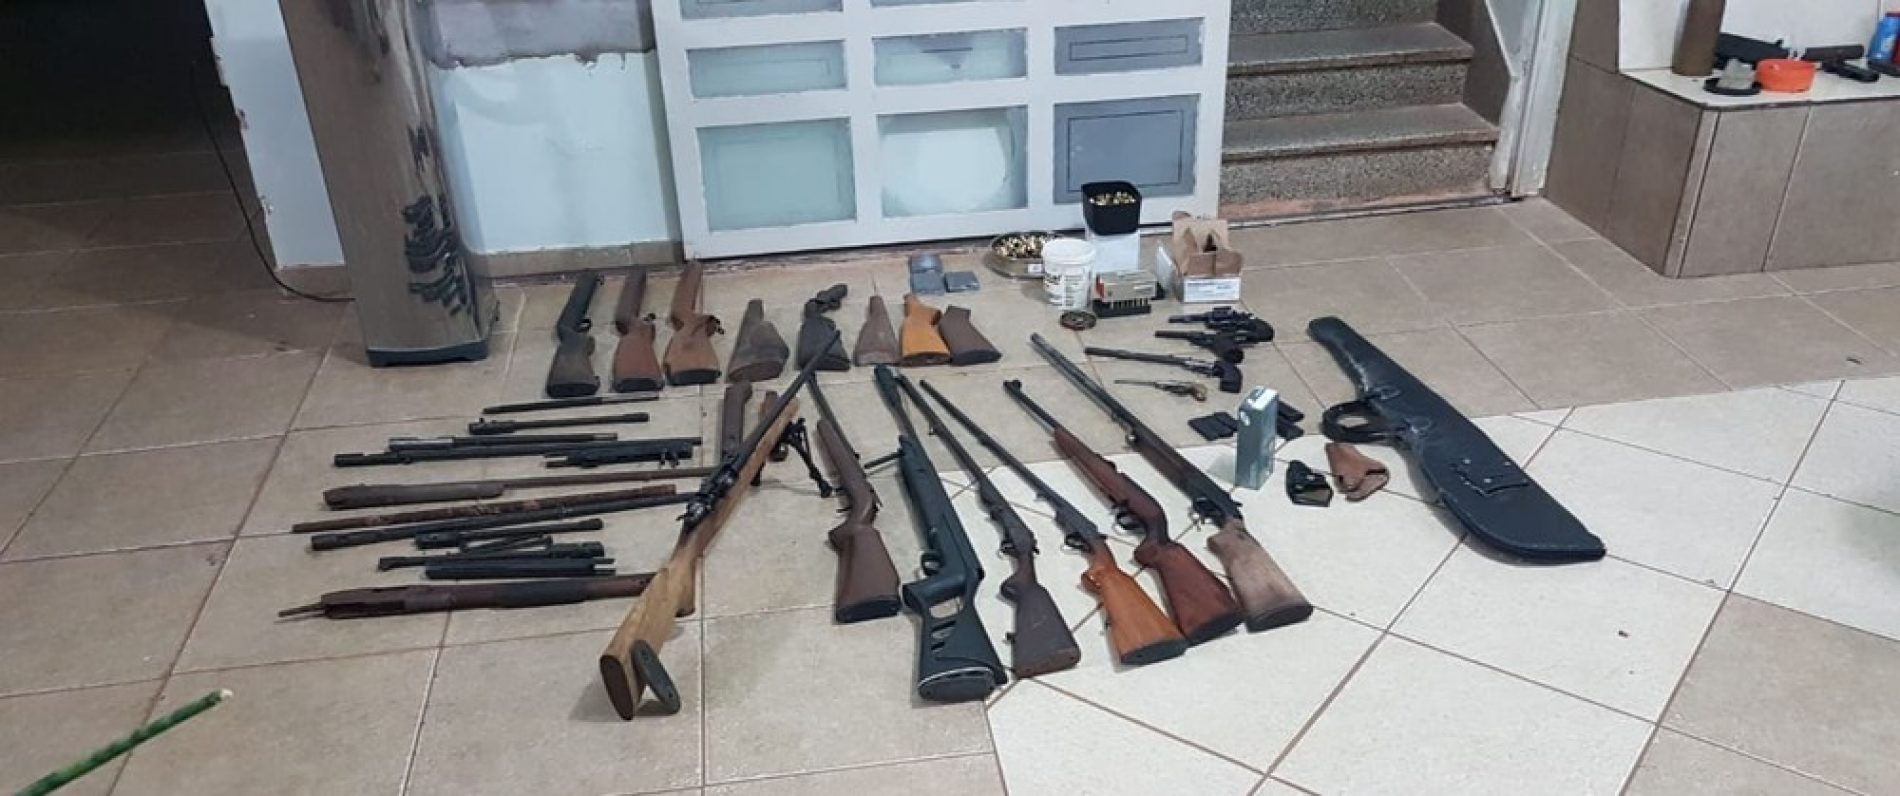 OLÍMPIA: Polícia apreende arsenal após roubo a colecionador